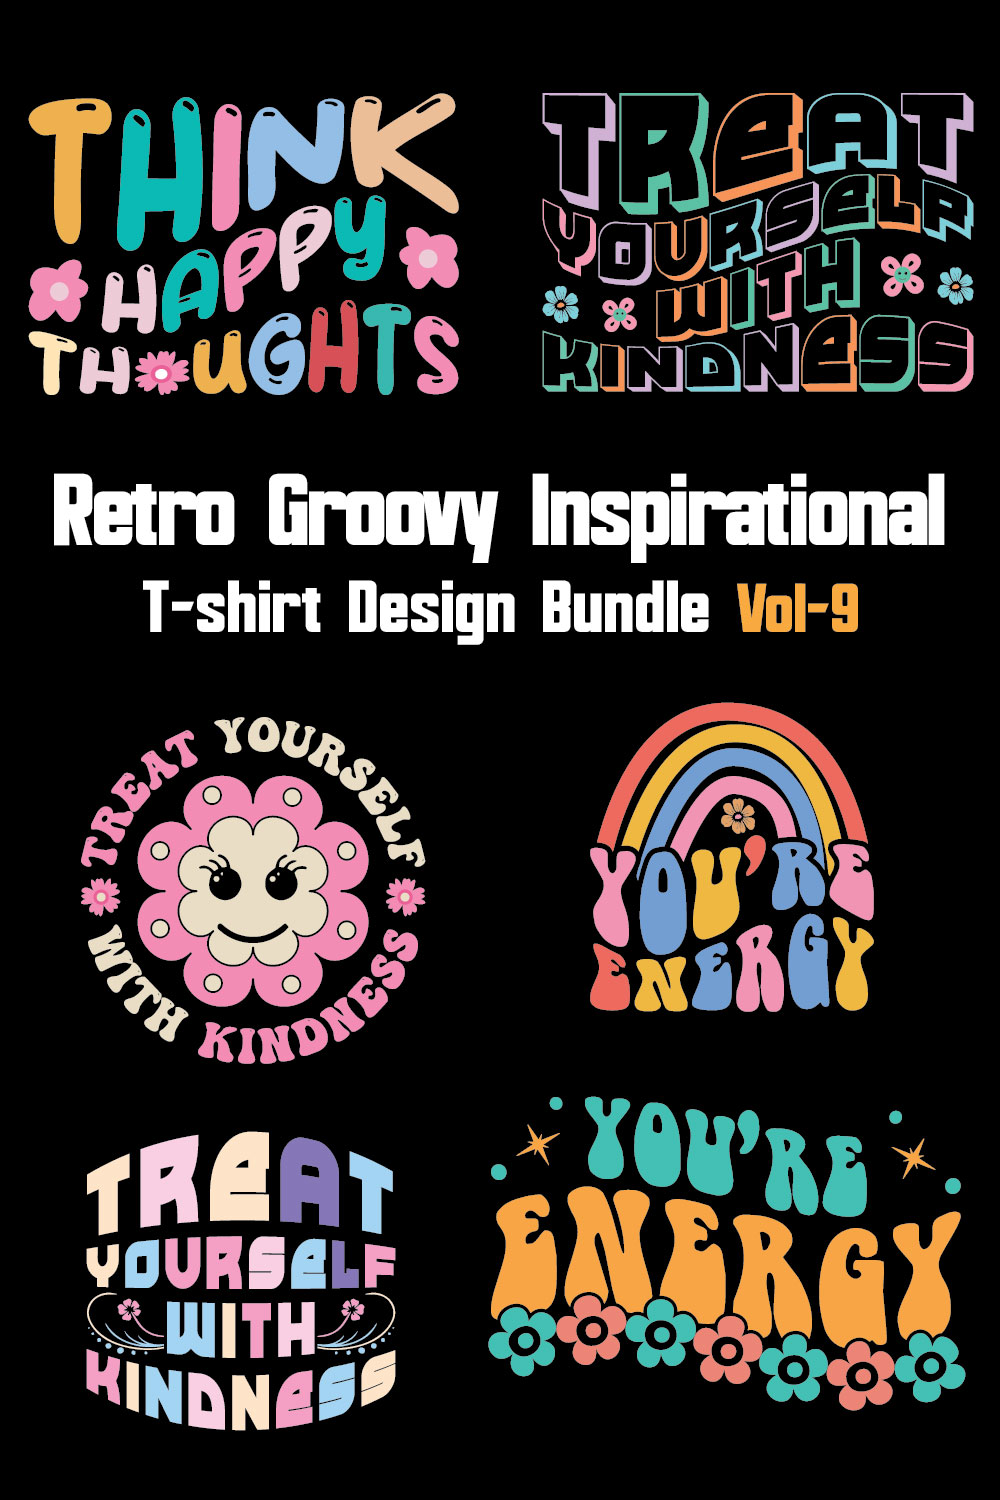 Motivational Typography T-shirt Design Bundle Vol-9 pinterest preview image.